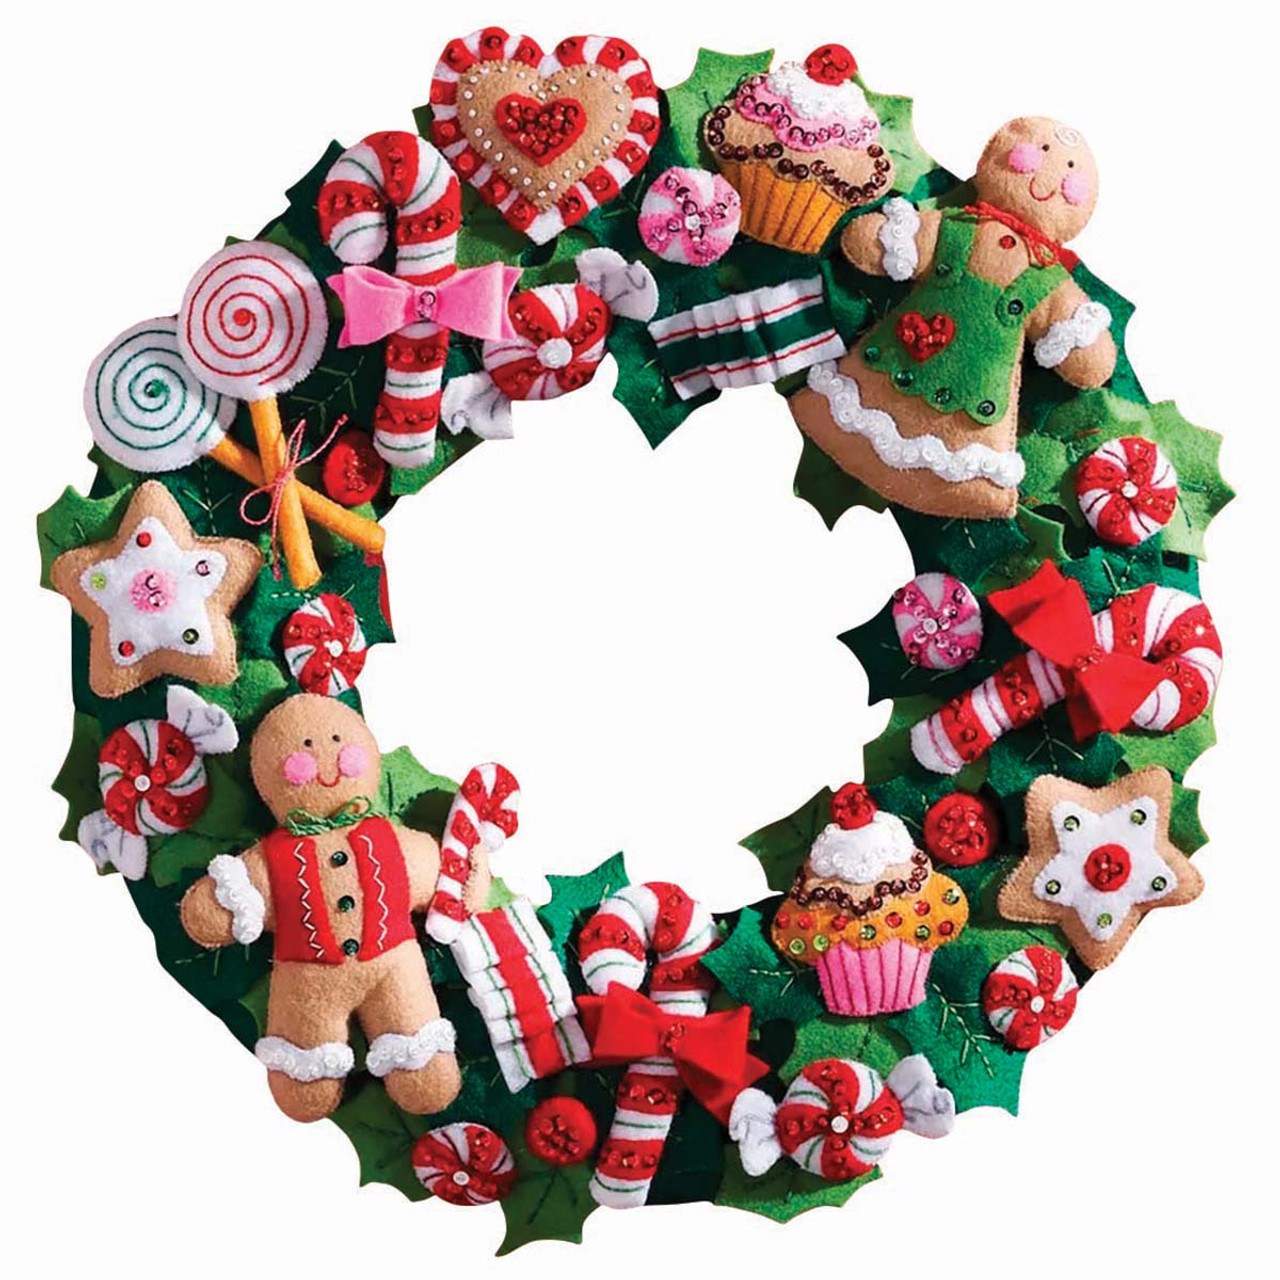 Bucilla Felt Christmas Stocking Kits, Ornament Kits, Wreath Kits